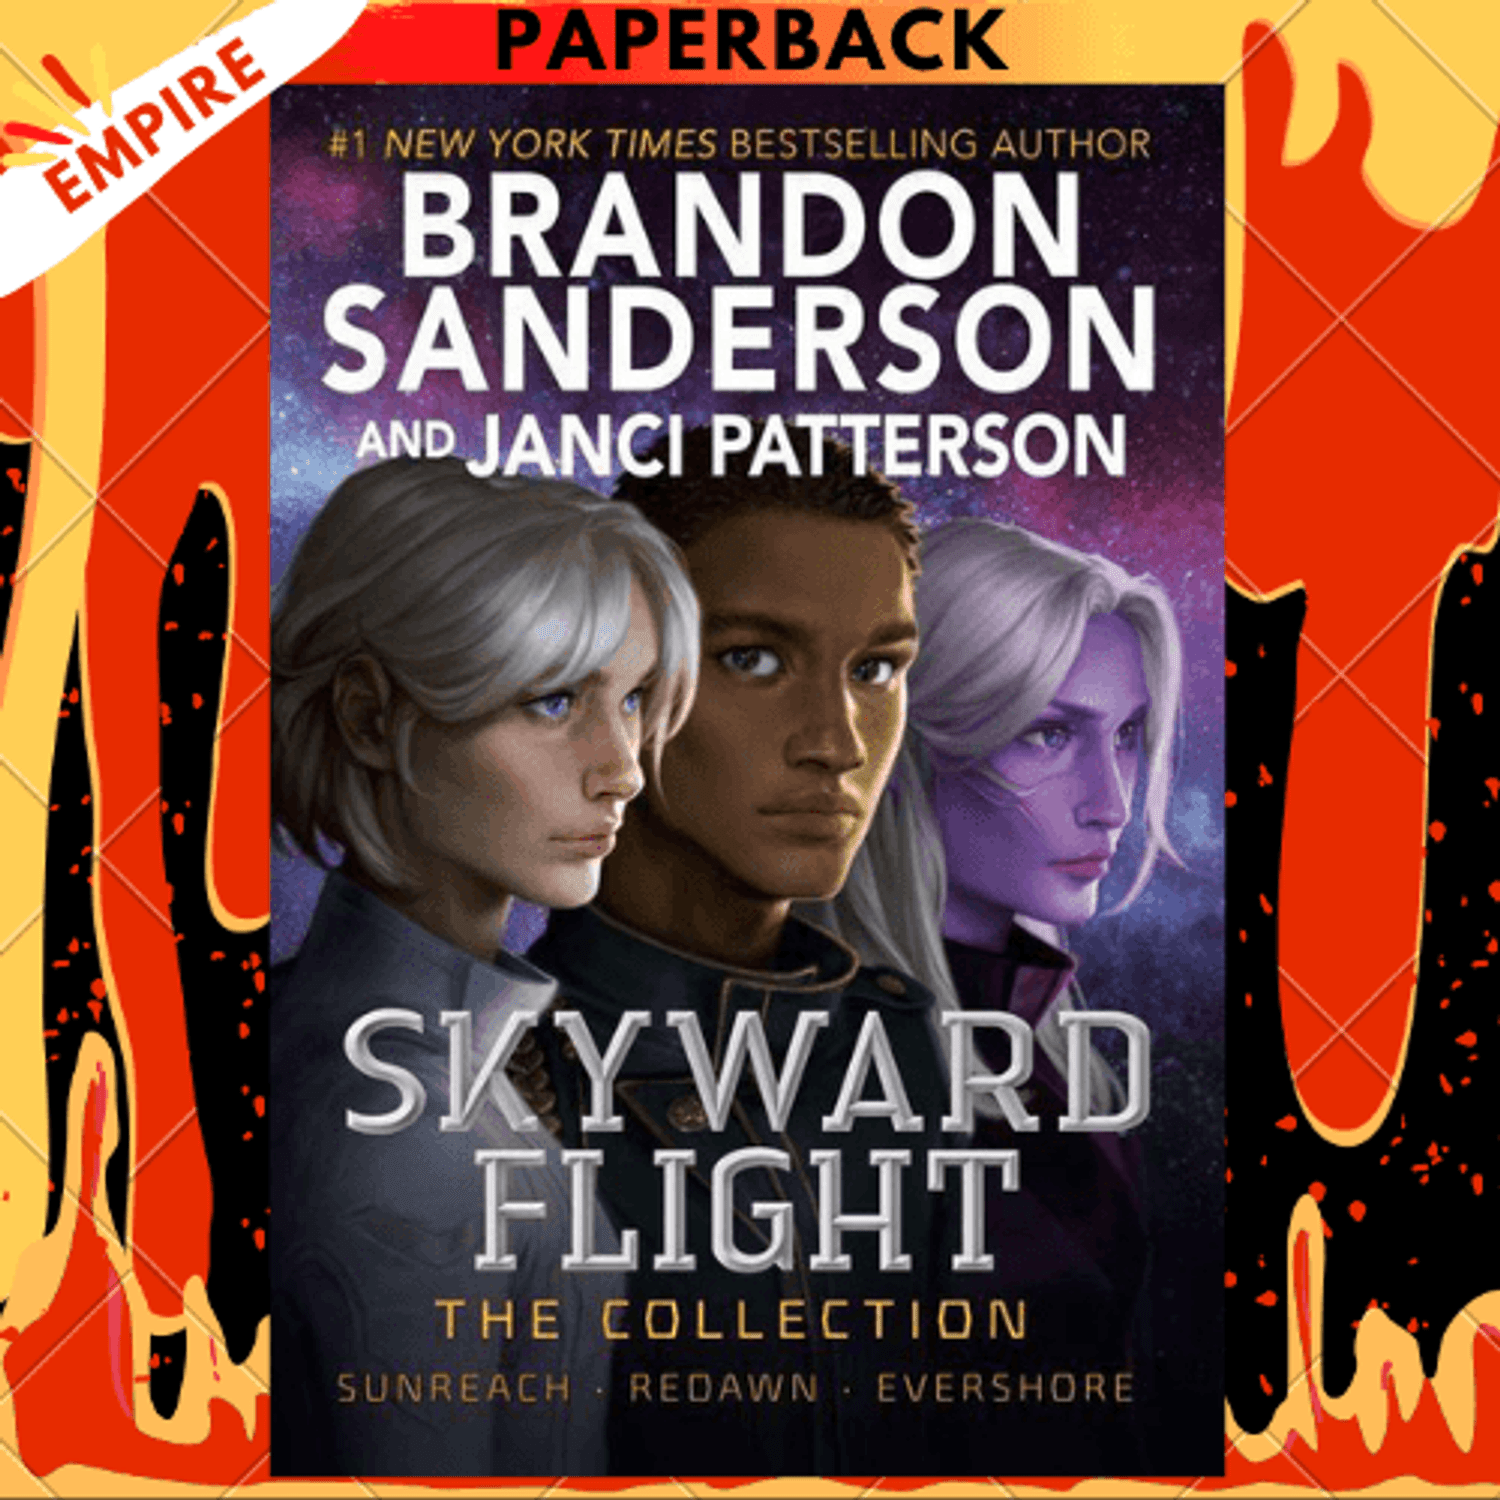 Review: Defiant (Skyward #4) by Brandon Sanderson